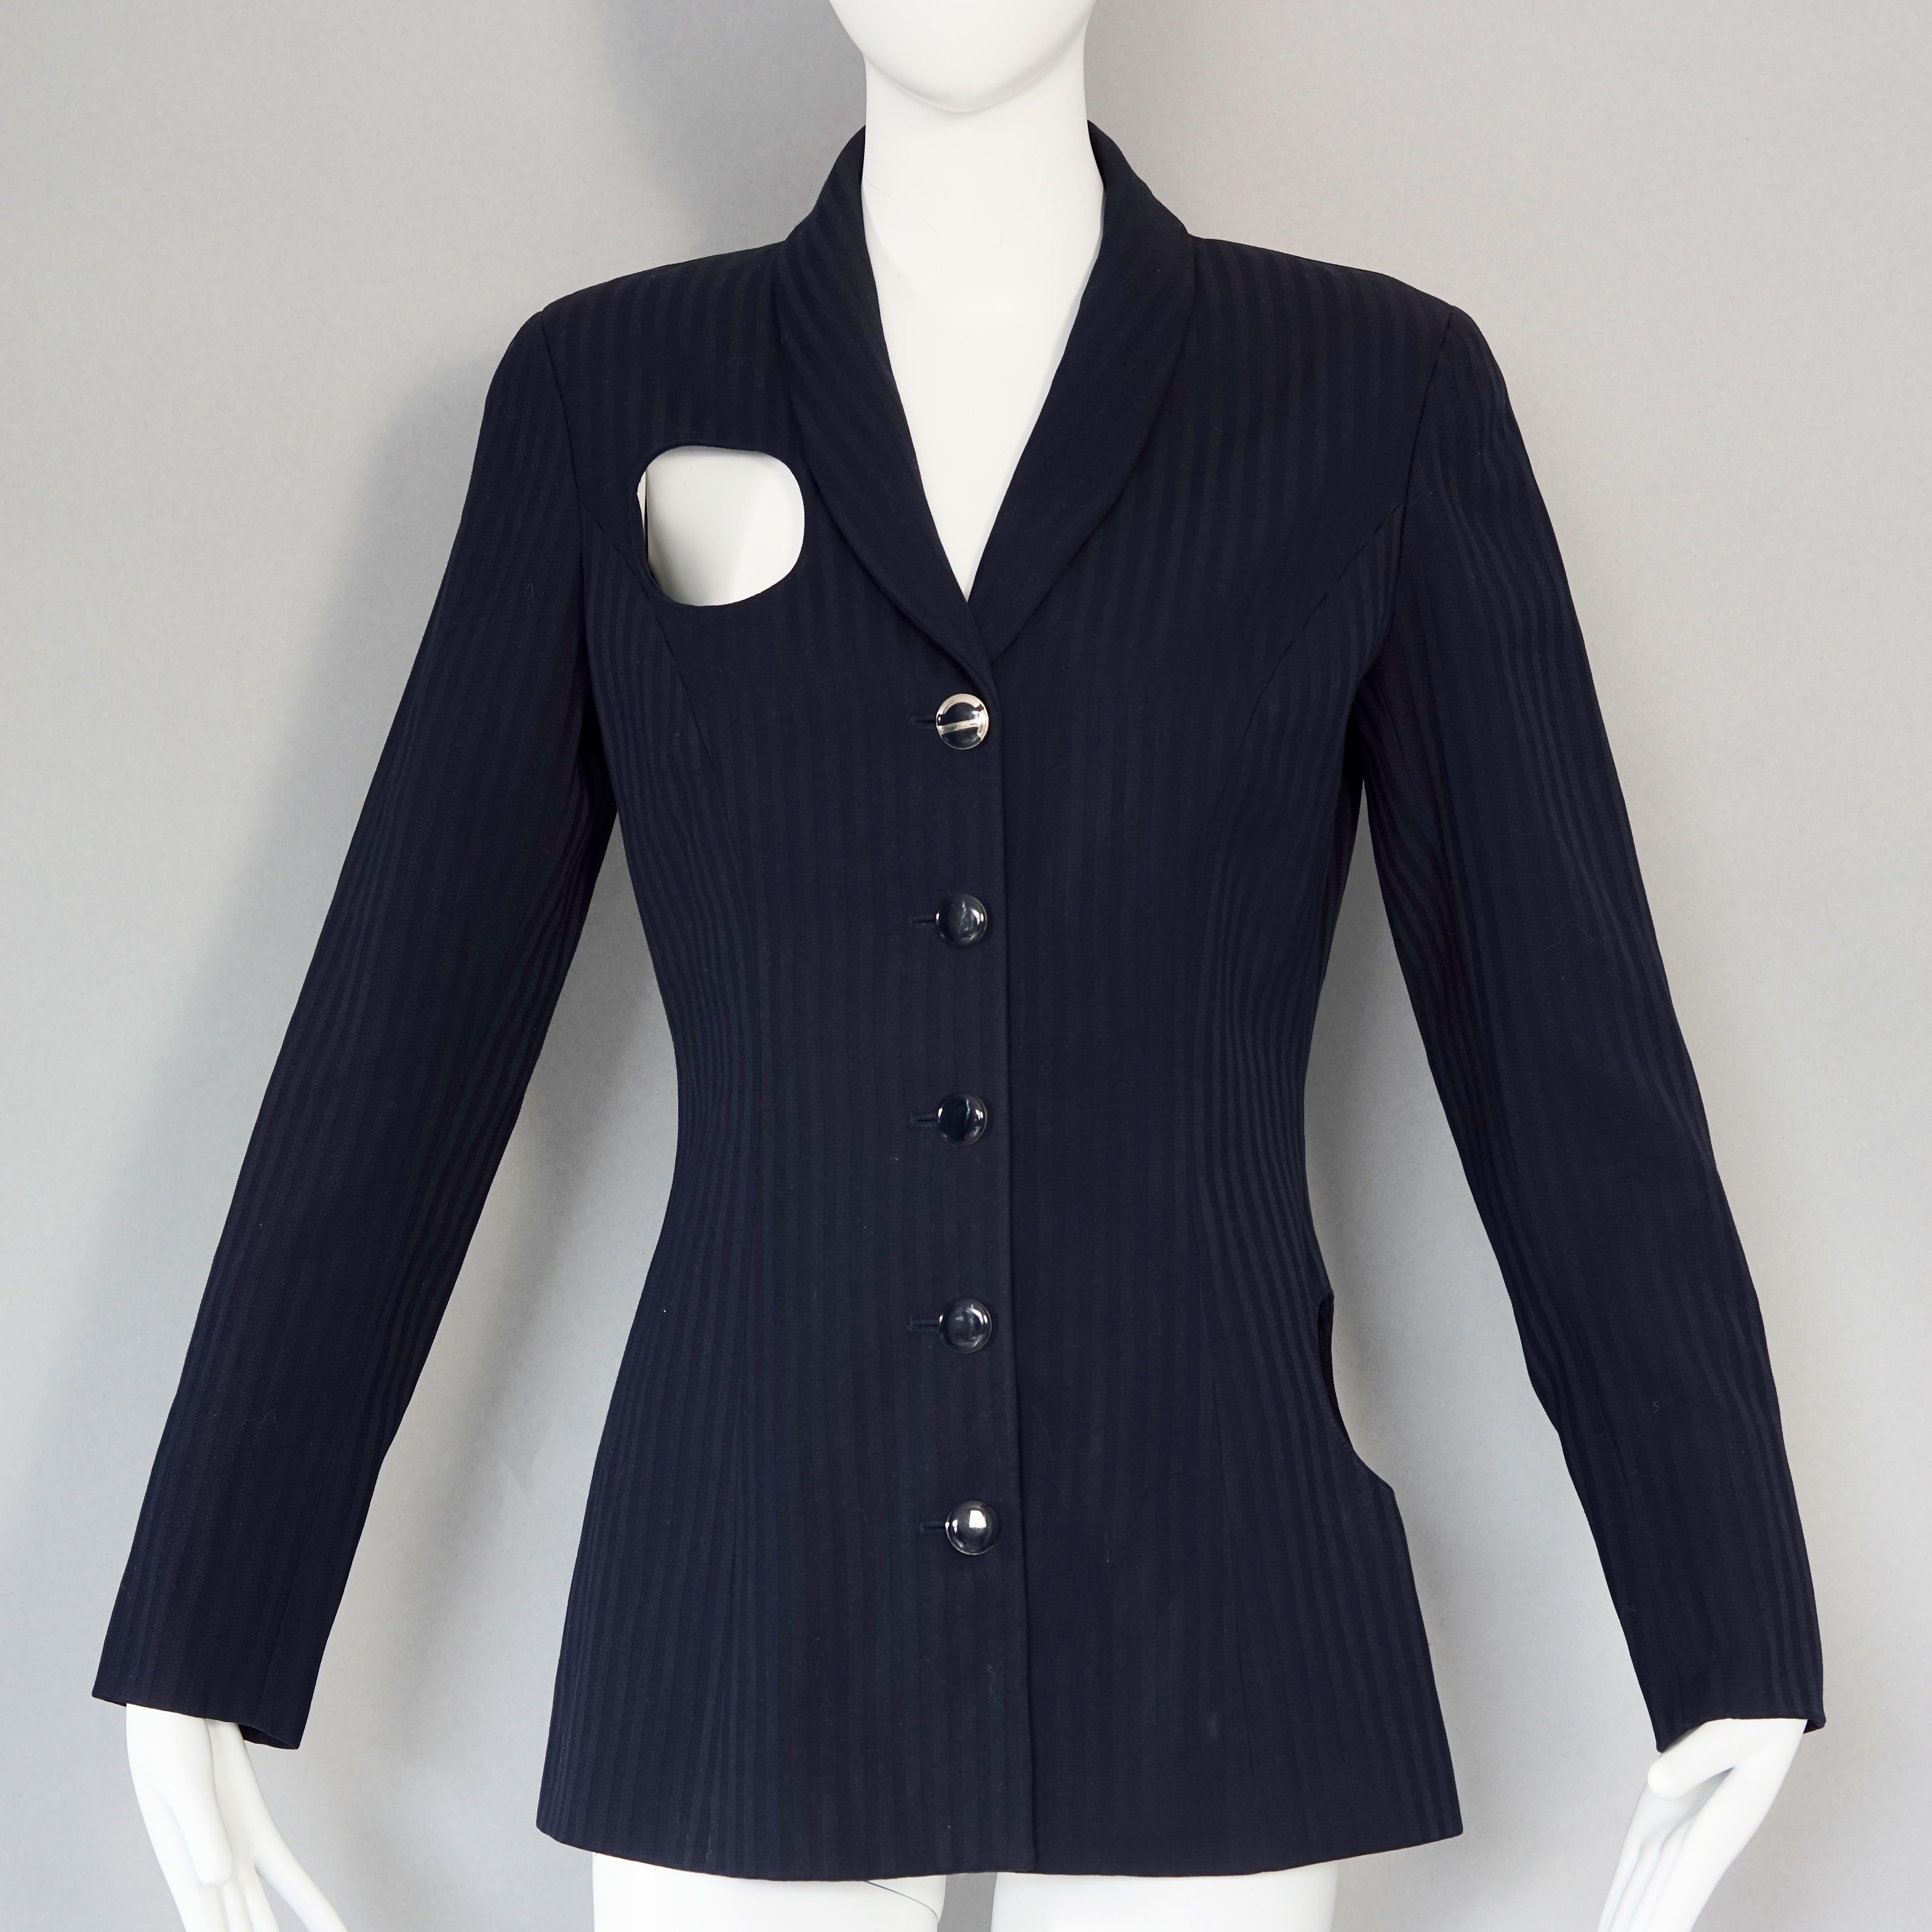 Vintage CHANTAL THOMASS Irregular Openwork Self Stripe Navy Blue Blazer Jacket

Measurements taken laid flat, please double bust, waist and hips:
Shoulder: 15.35 inches (39 cm)
Sleeves: 23.62 inches (60 cm)
Bust: 18.70 inches (47.5 cm)
Waist: 16.92